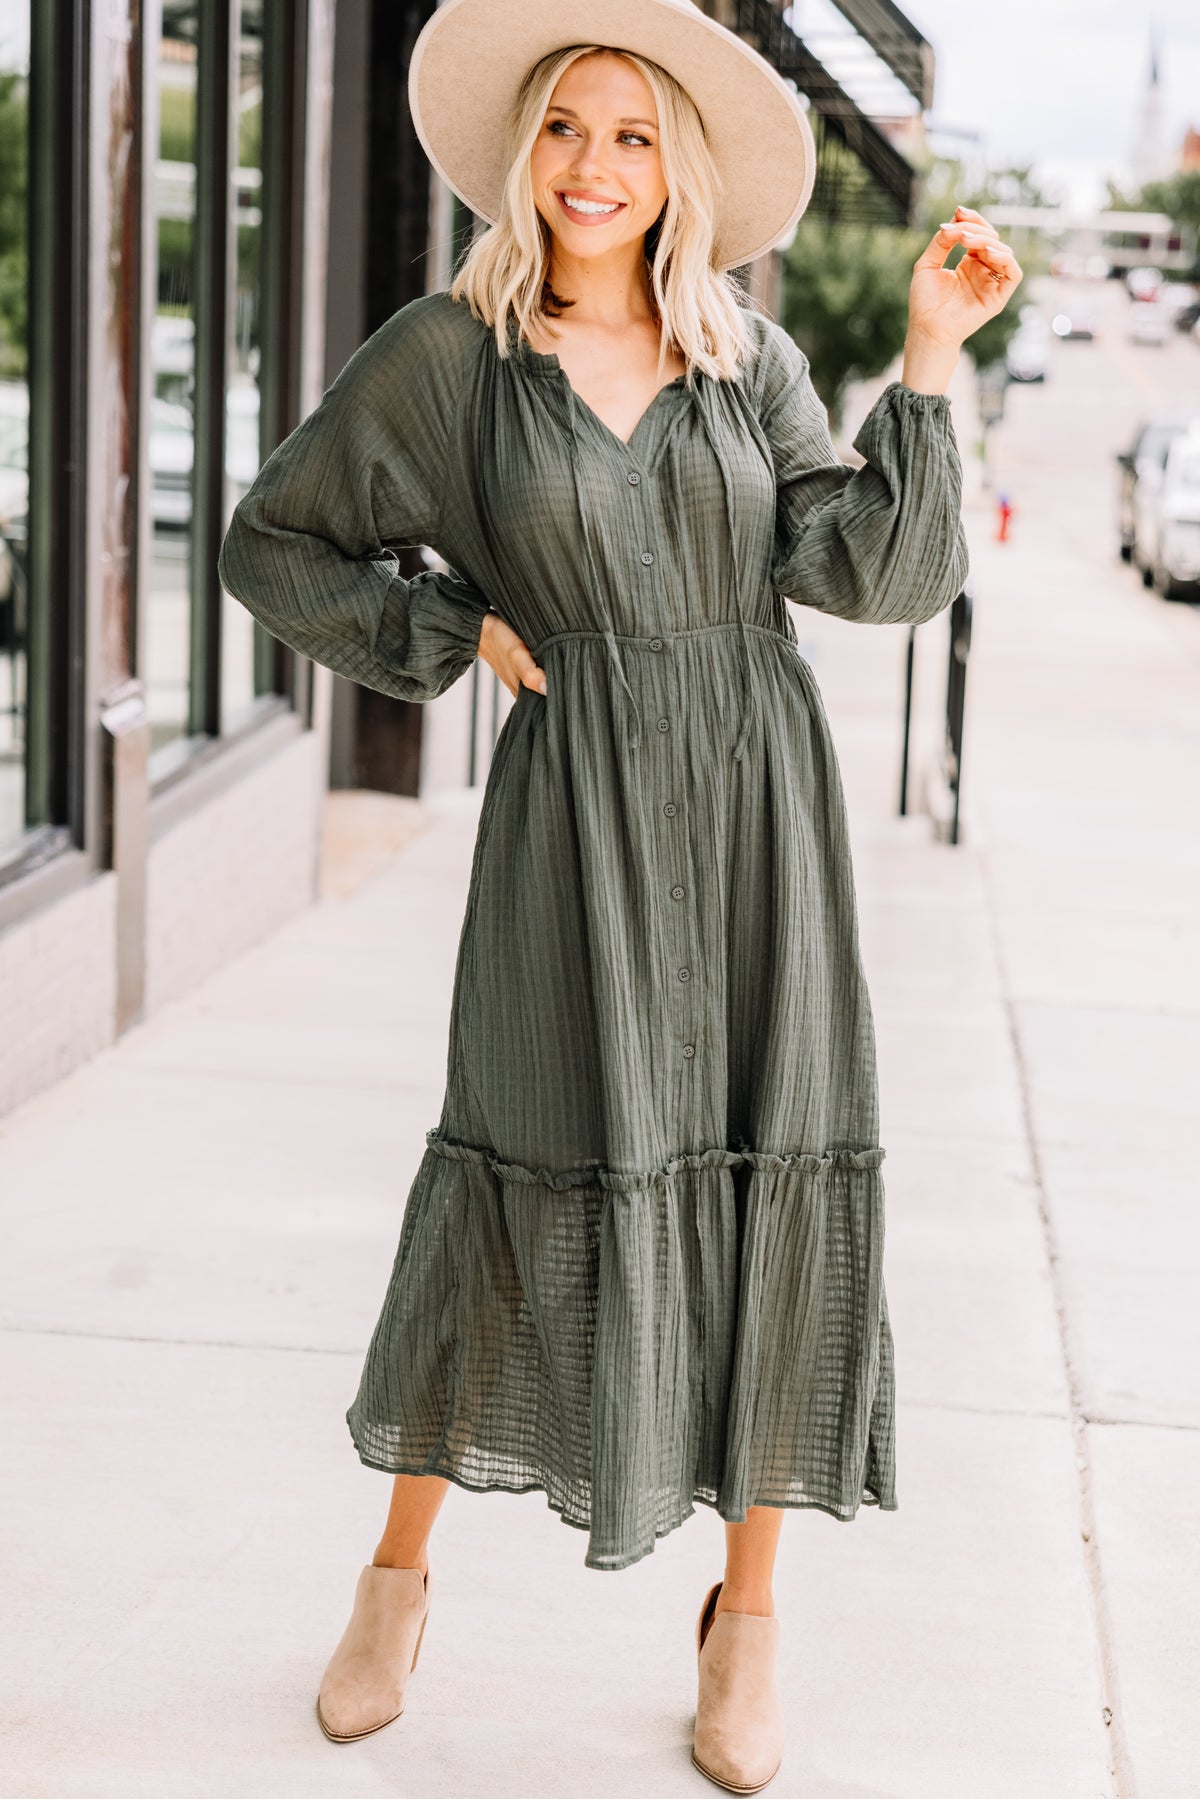 Linked In Love Olive Green Midi Dress – Shop the Mint